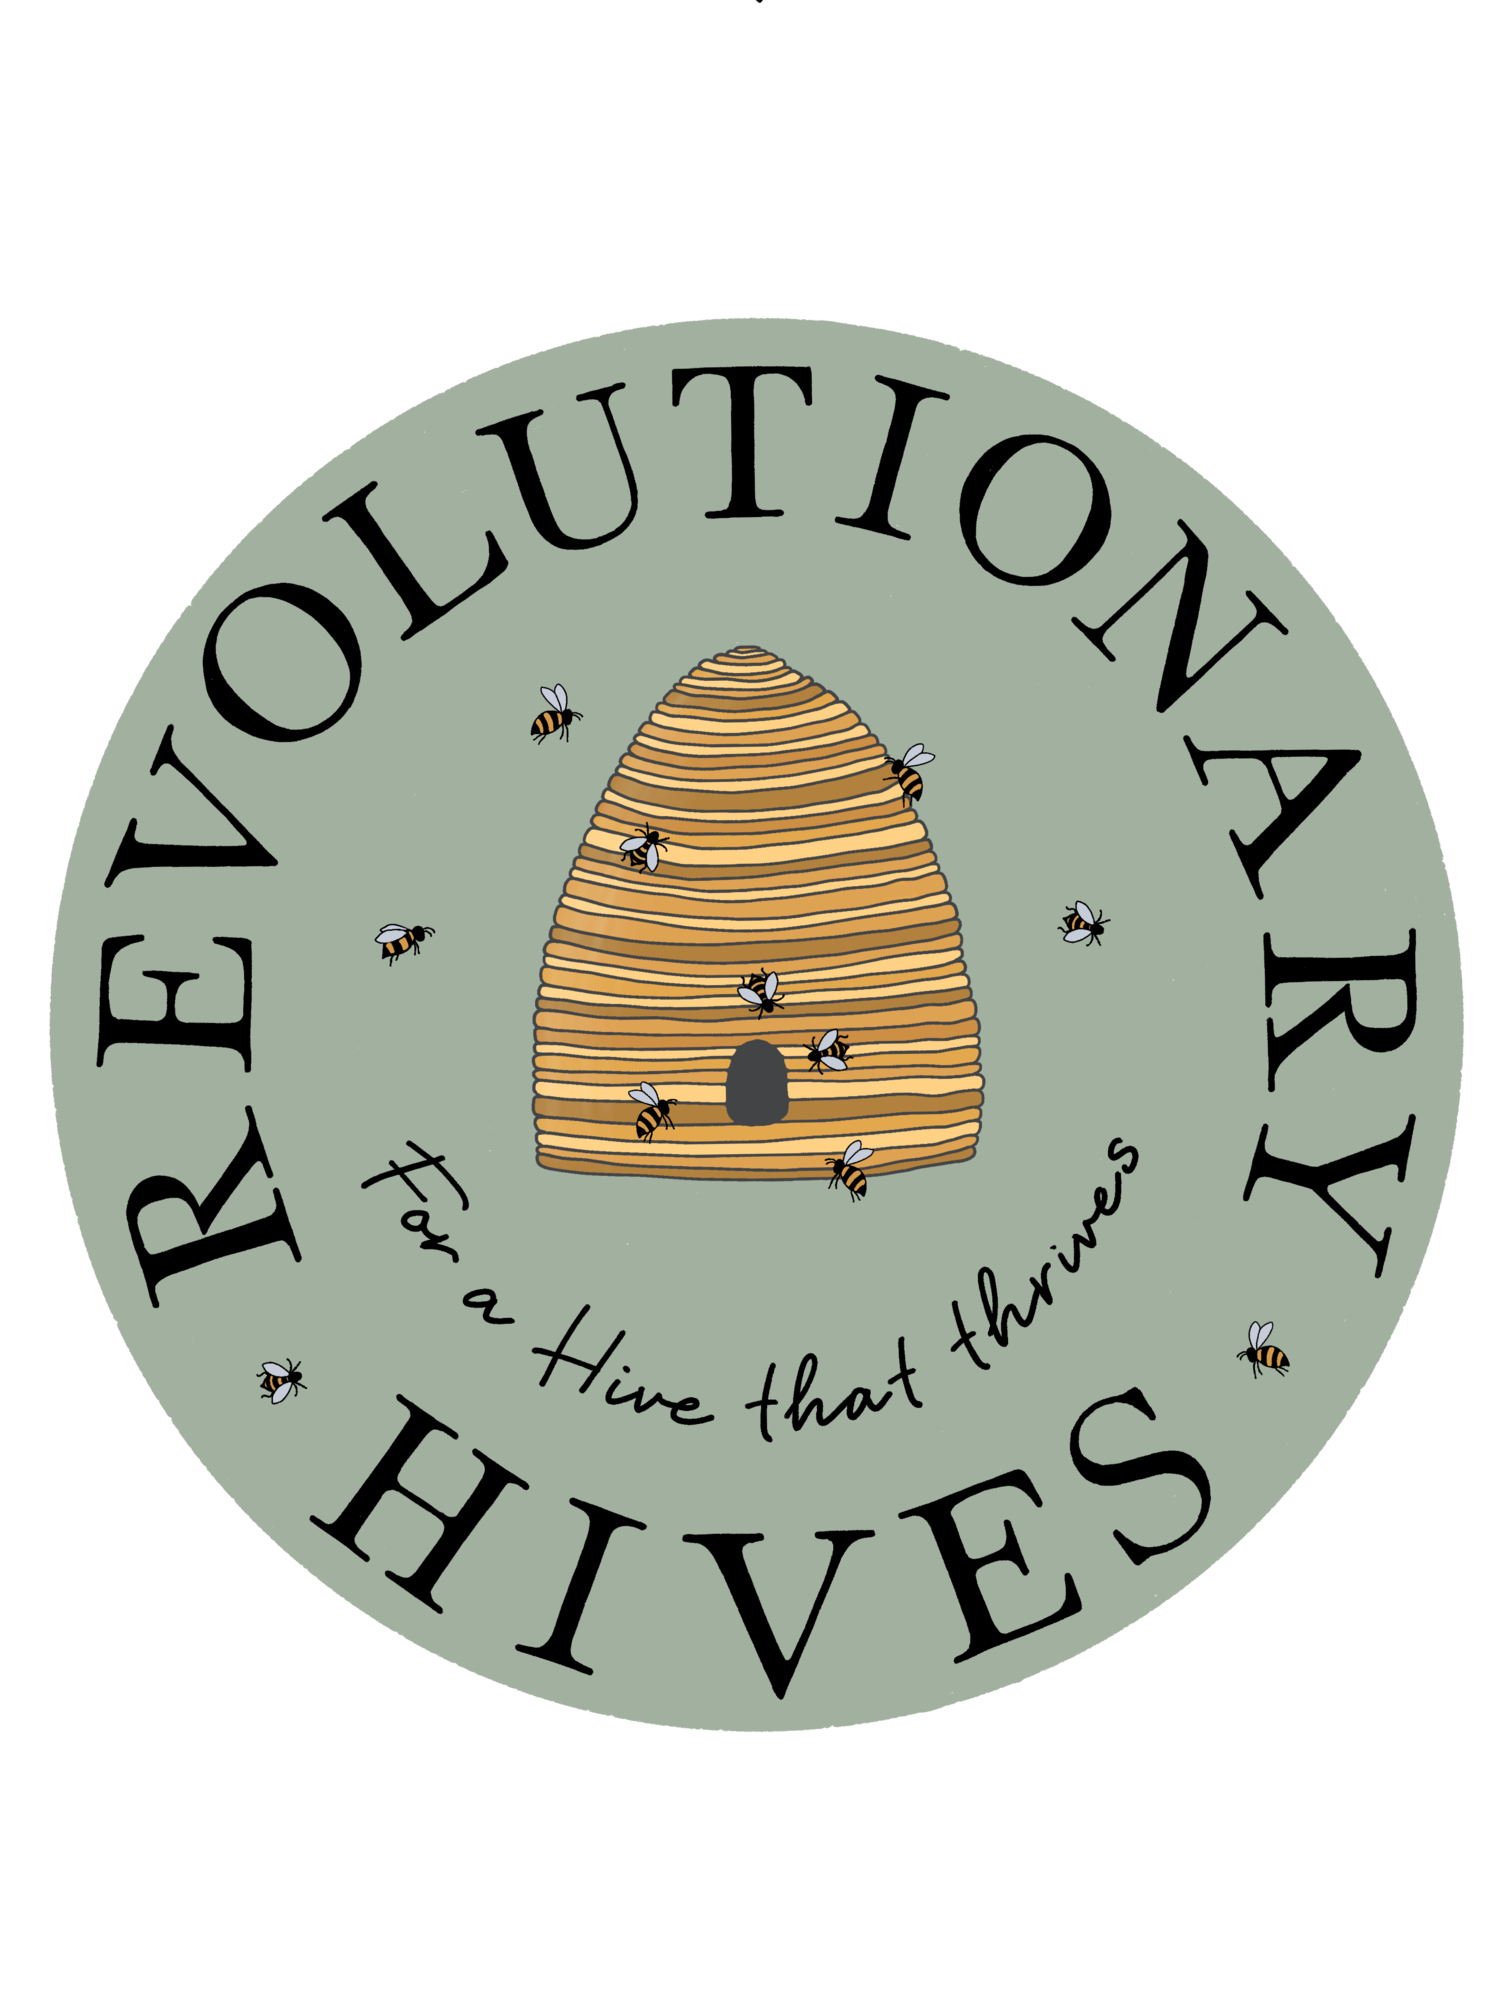 Revolutionary Hives